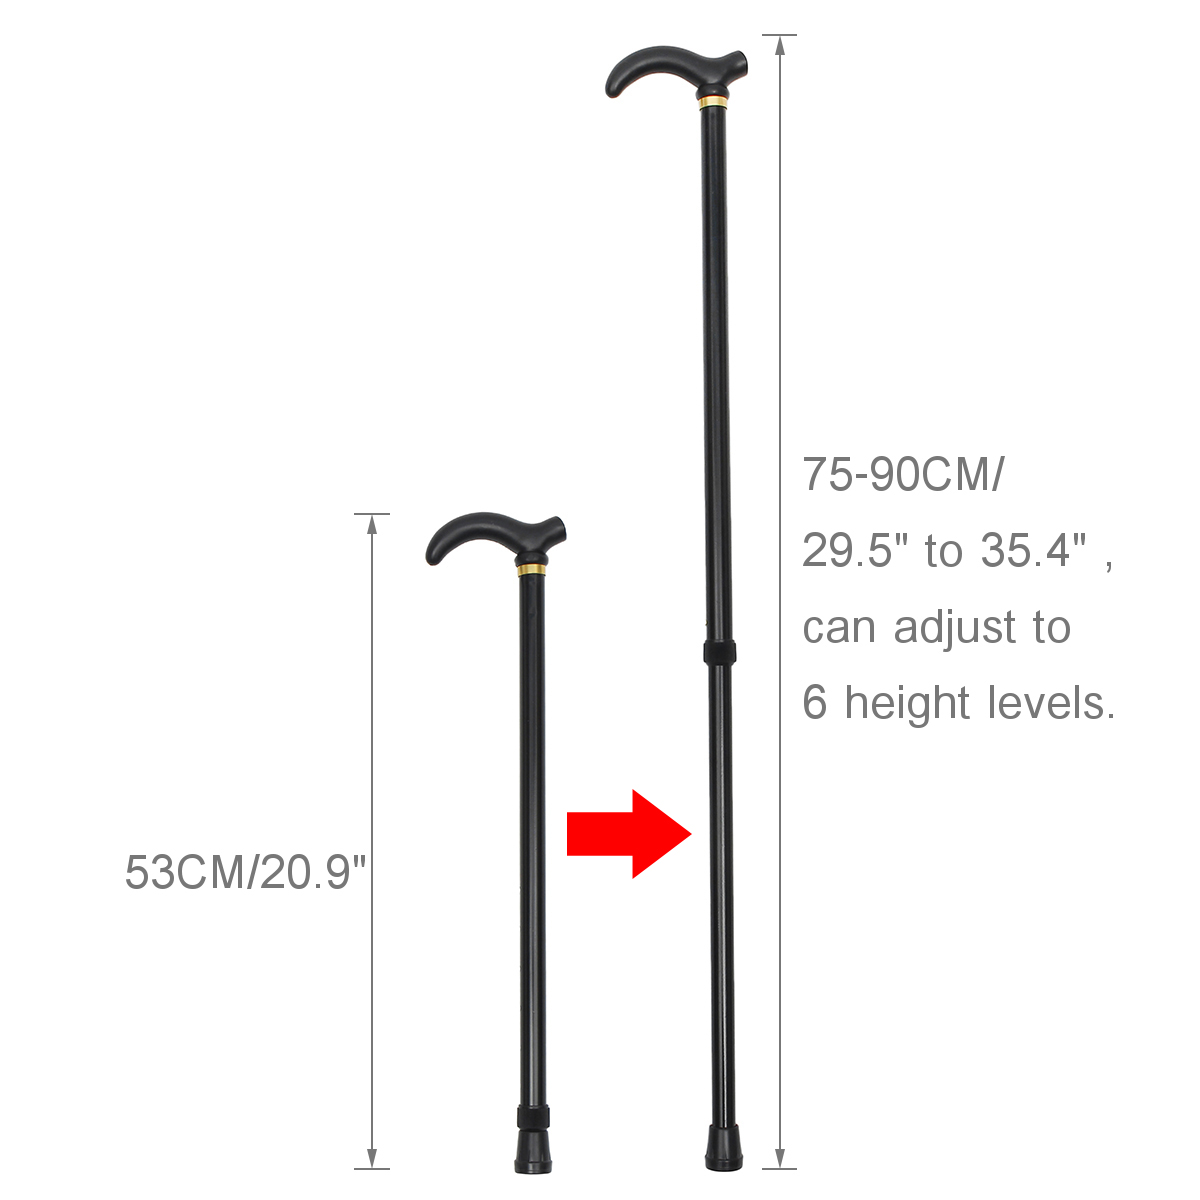 75-90CM-Metal-Walking-Hiking-Stick-Travel-Folding-Cane-Pole-Compact-Adjustable-Alpenstock-1247193-2